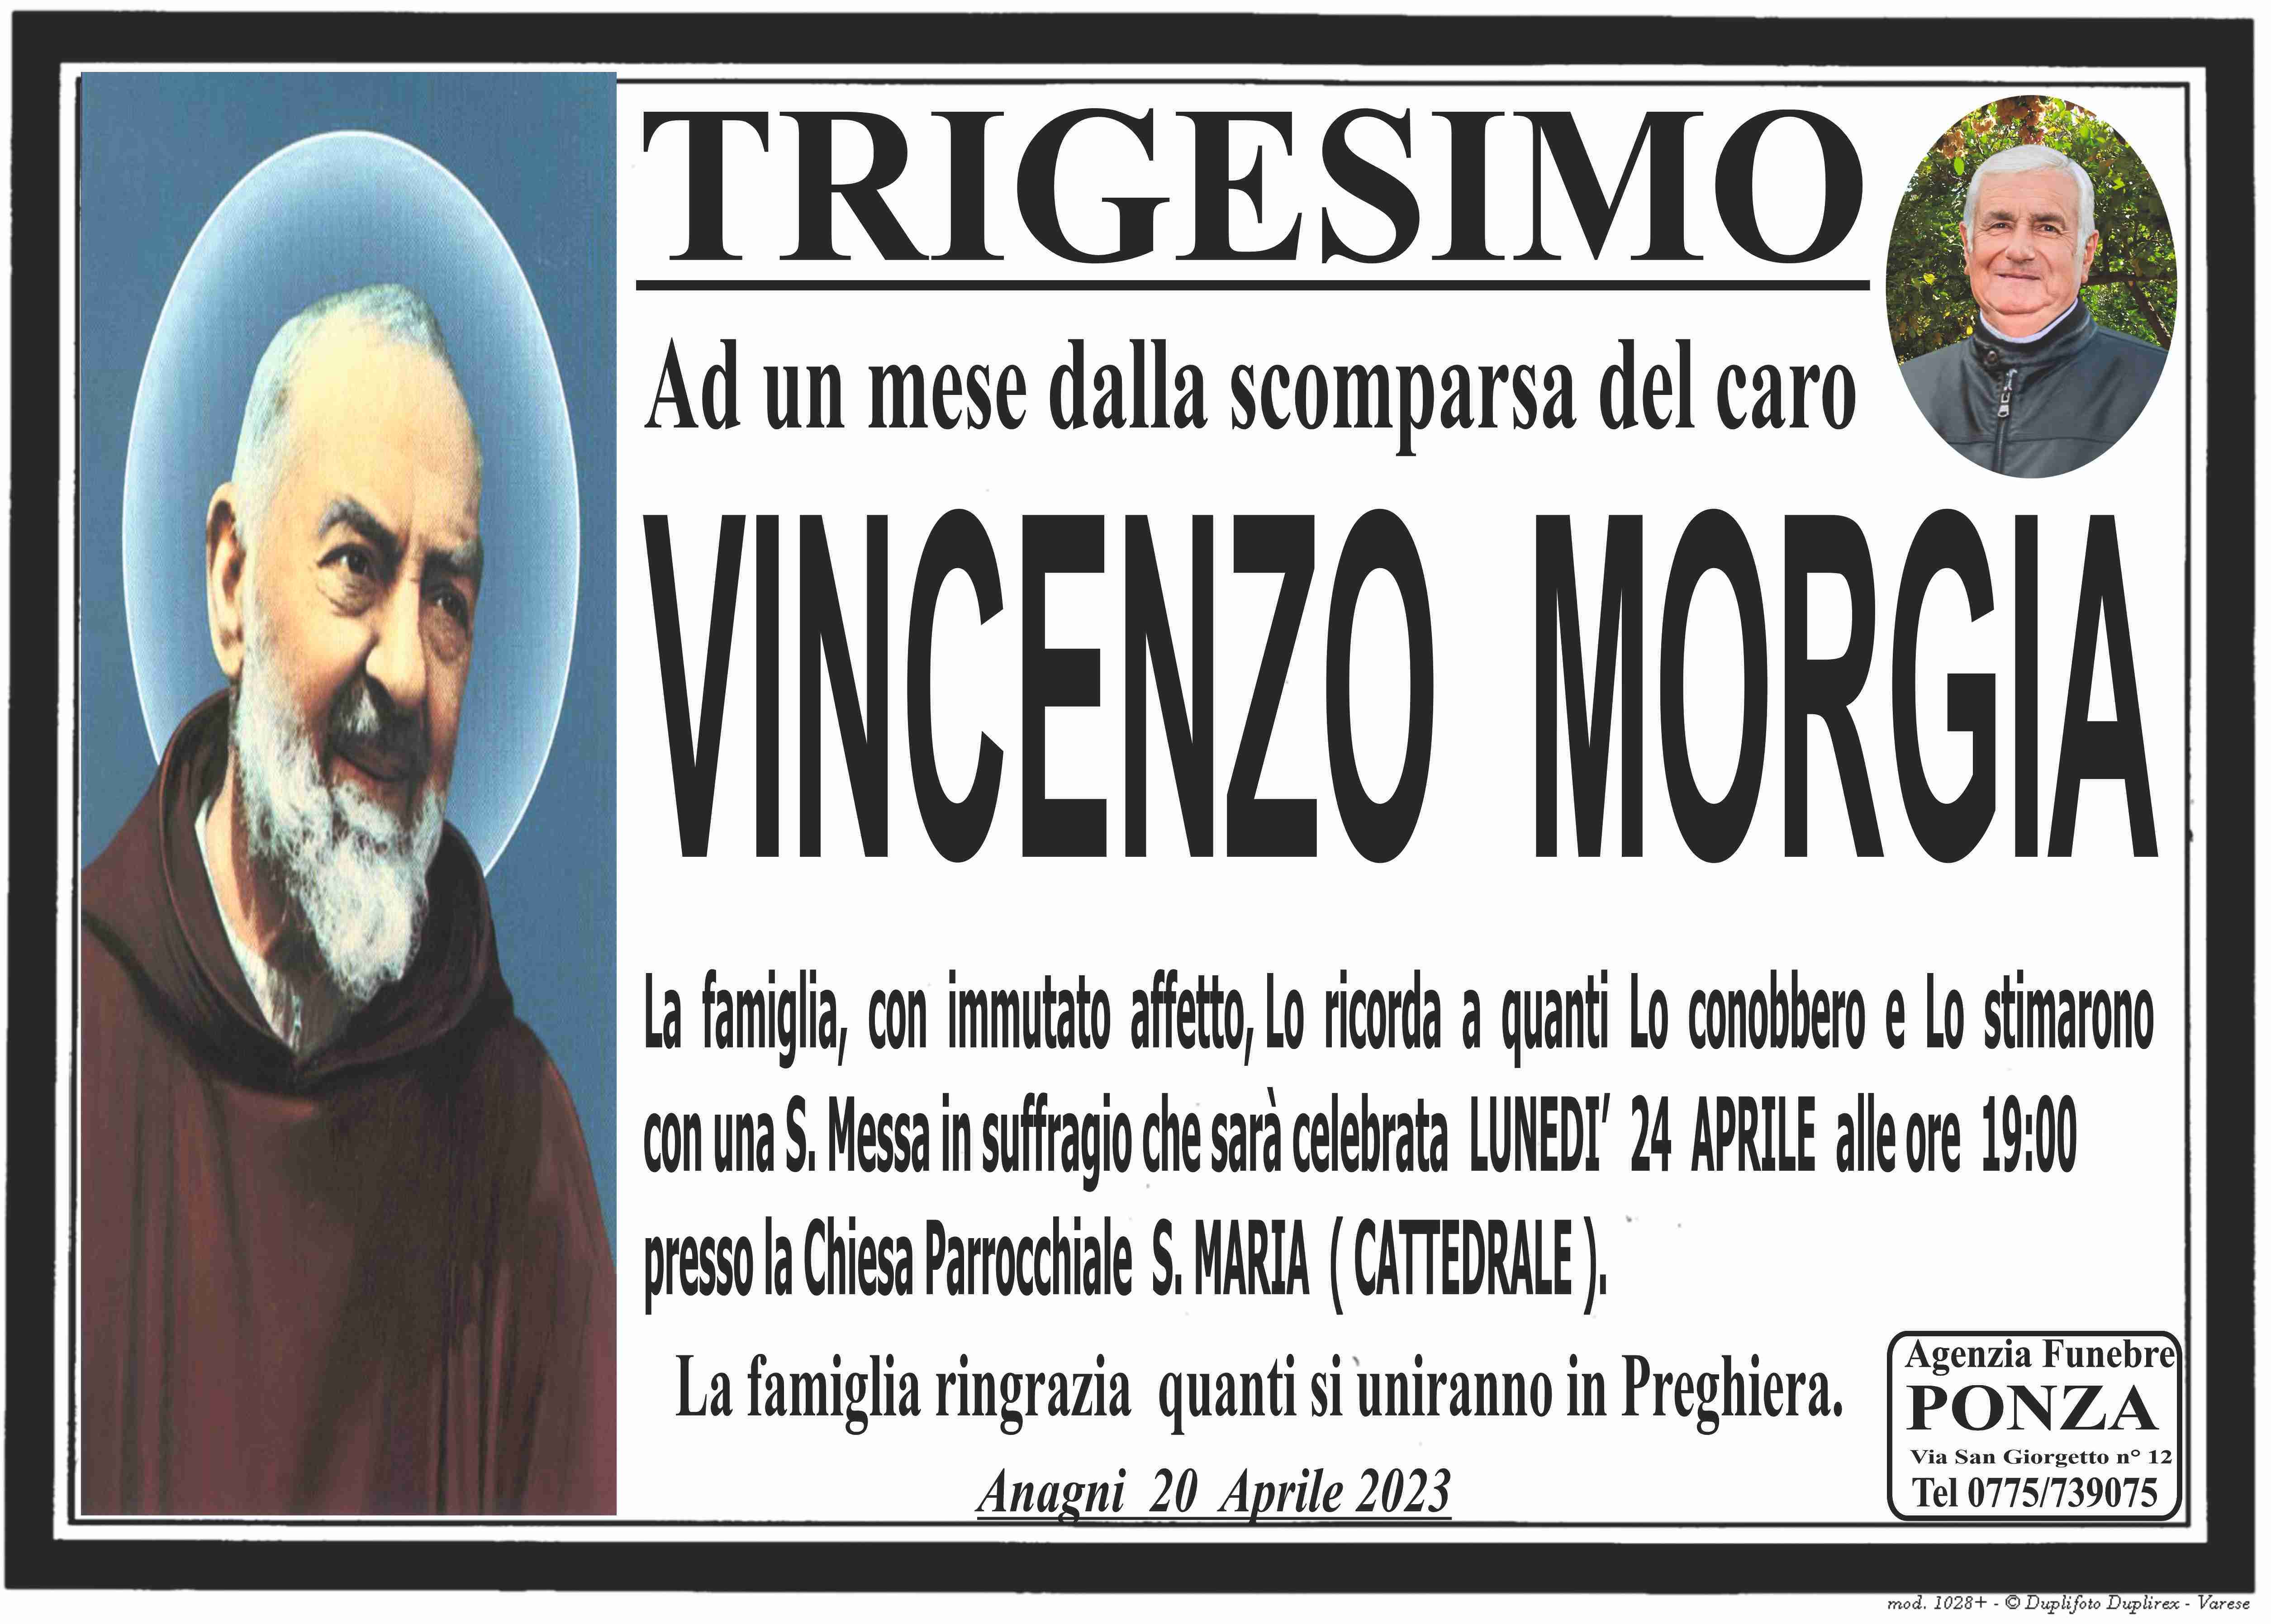 Vincenzo Morgia